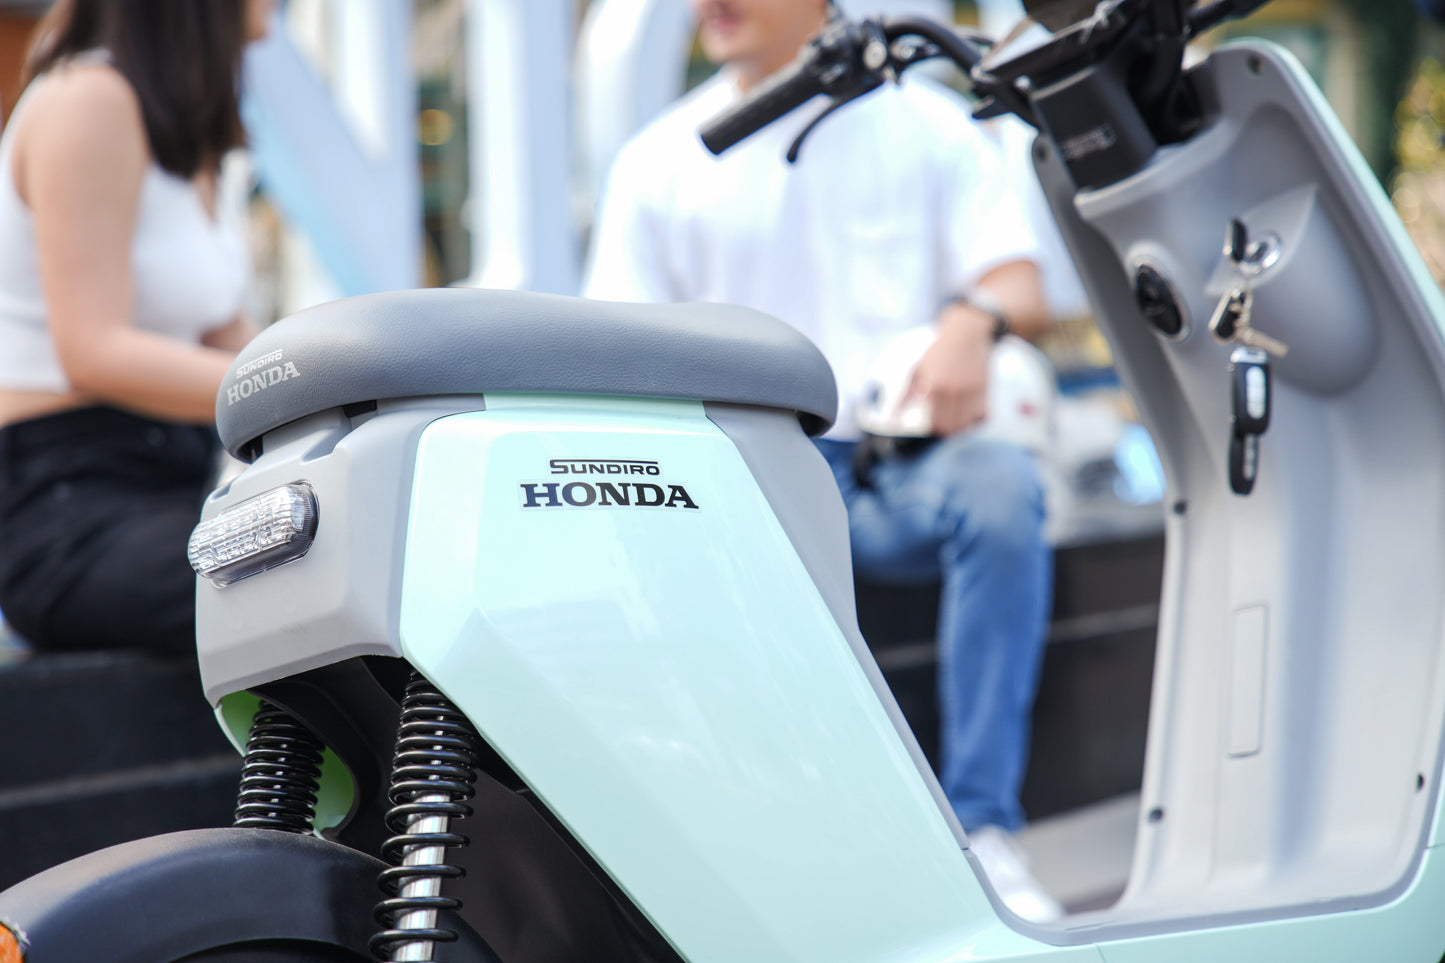 Sundiro Honda S07 Electric Scooter